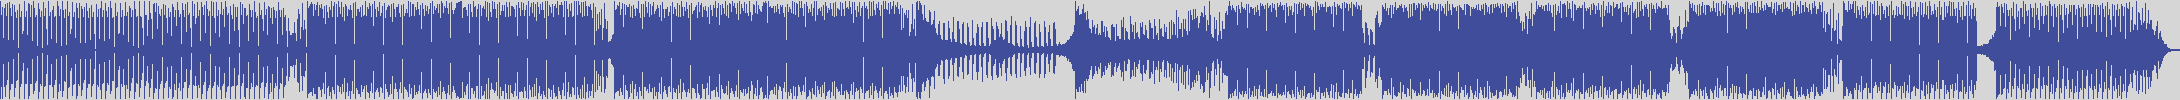 nf_boyz_records [NFY022] Van Zink - Air Sax Line [Trumphet Mix] audio wave form